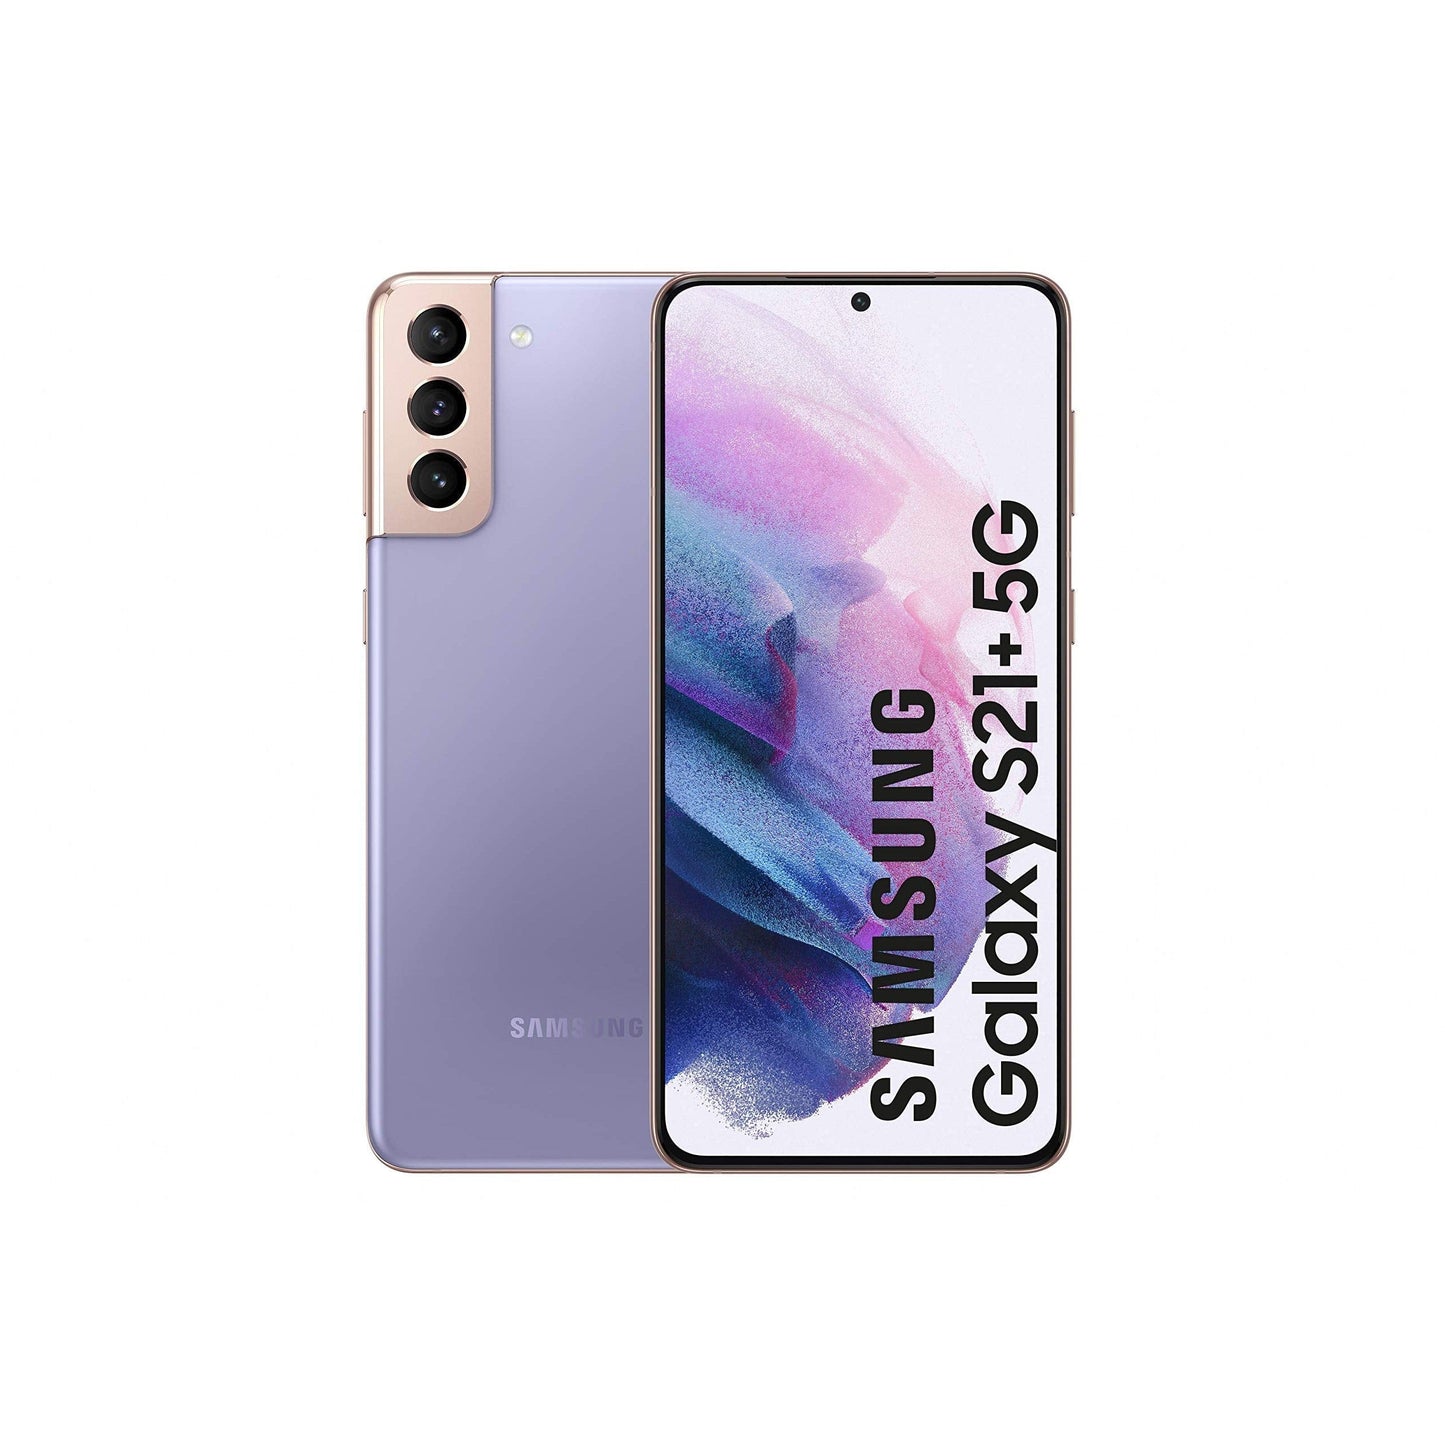 Samsung Galaxy S21+ 5G - 128 GB - Phantom Violet - Unlocked